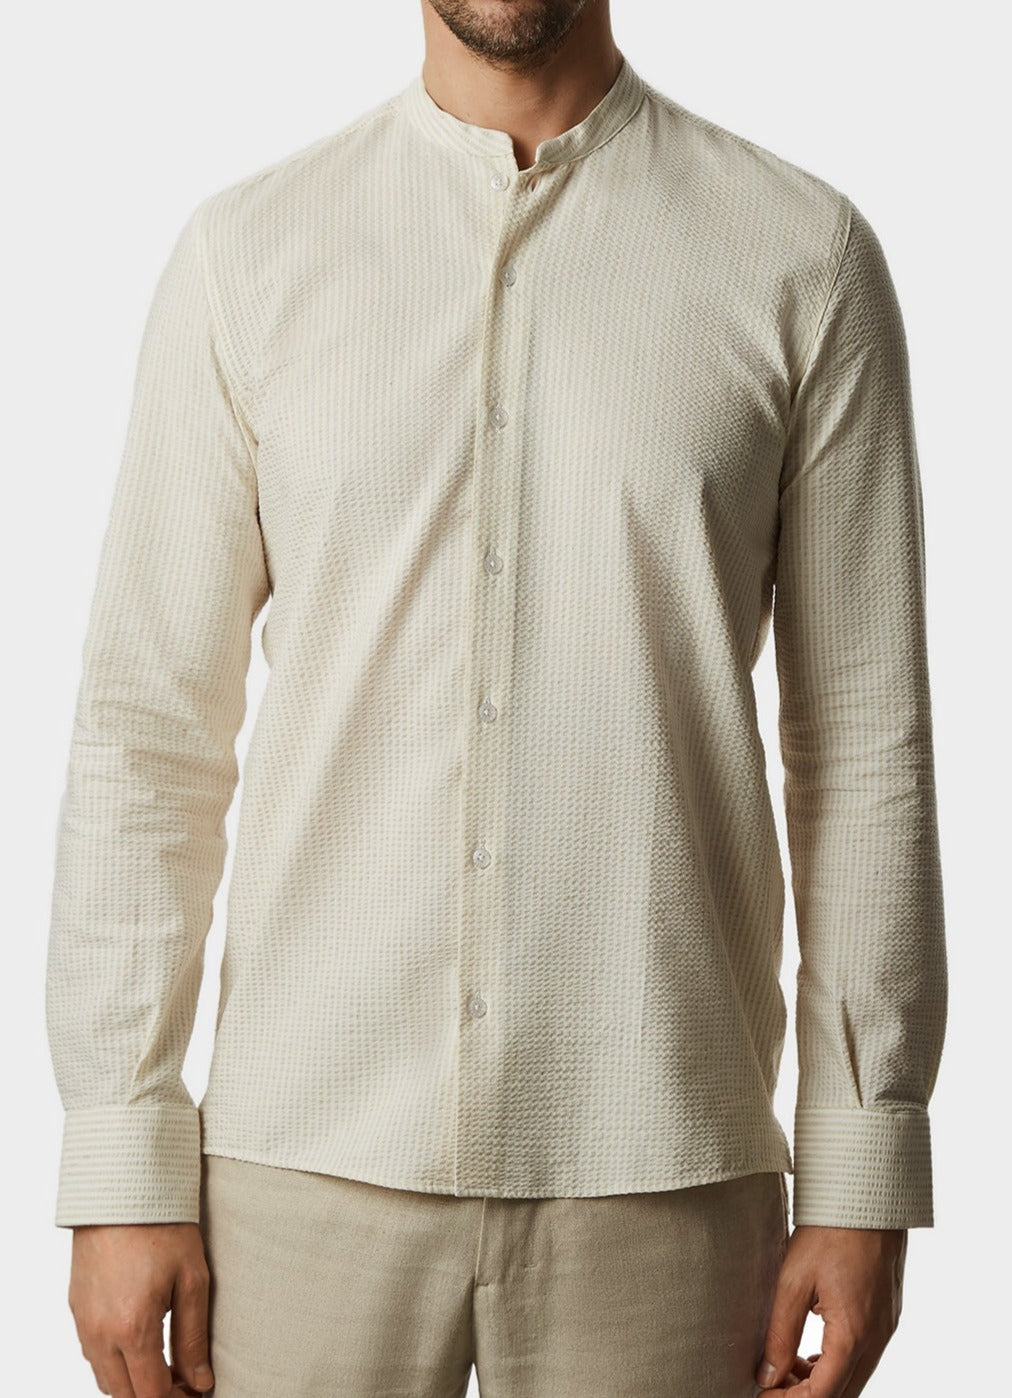 Men Shirt | White/Sand Elastic Seersucker Mandarin Collar Shirt by Spanish designer Adolfo Dominguez